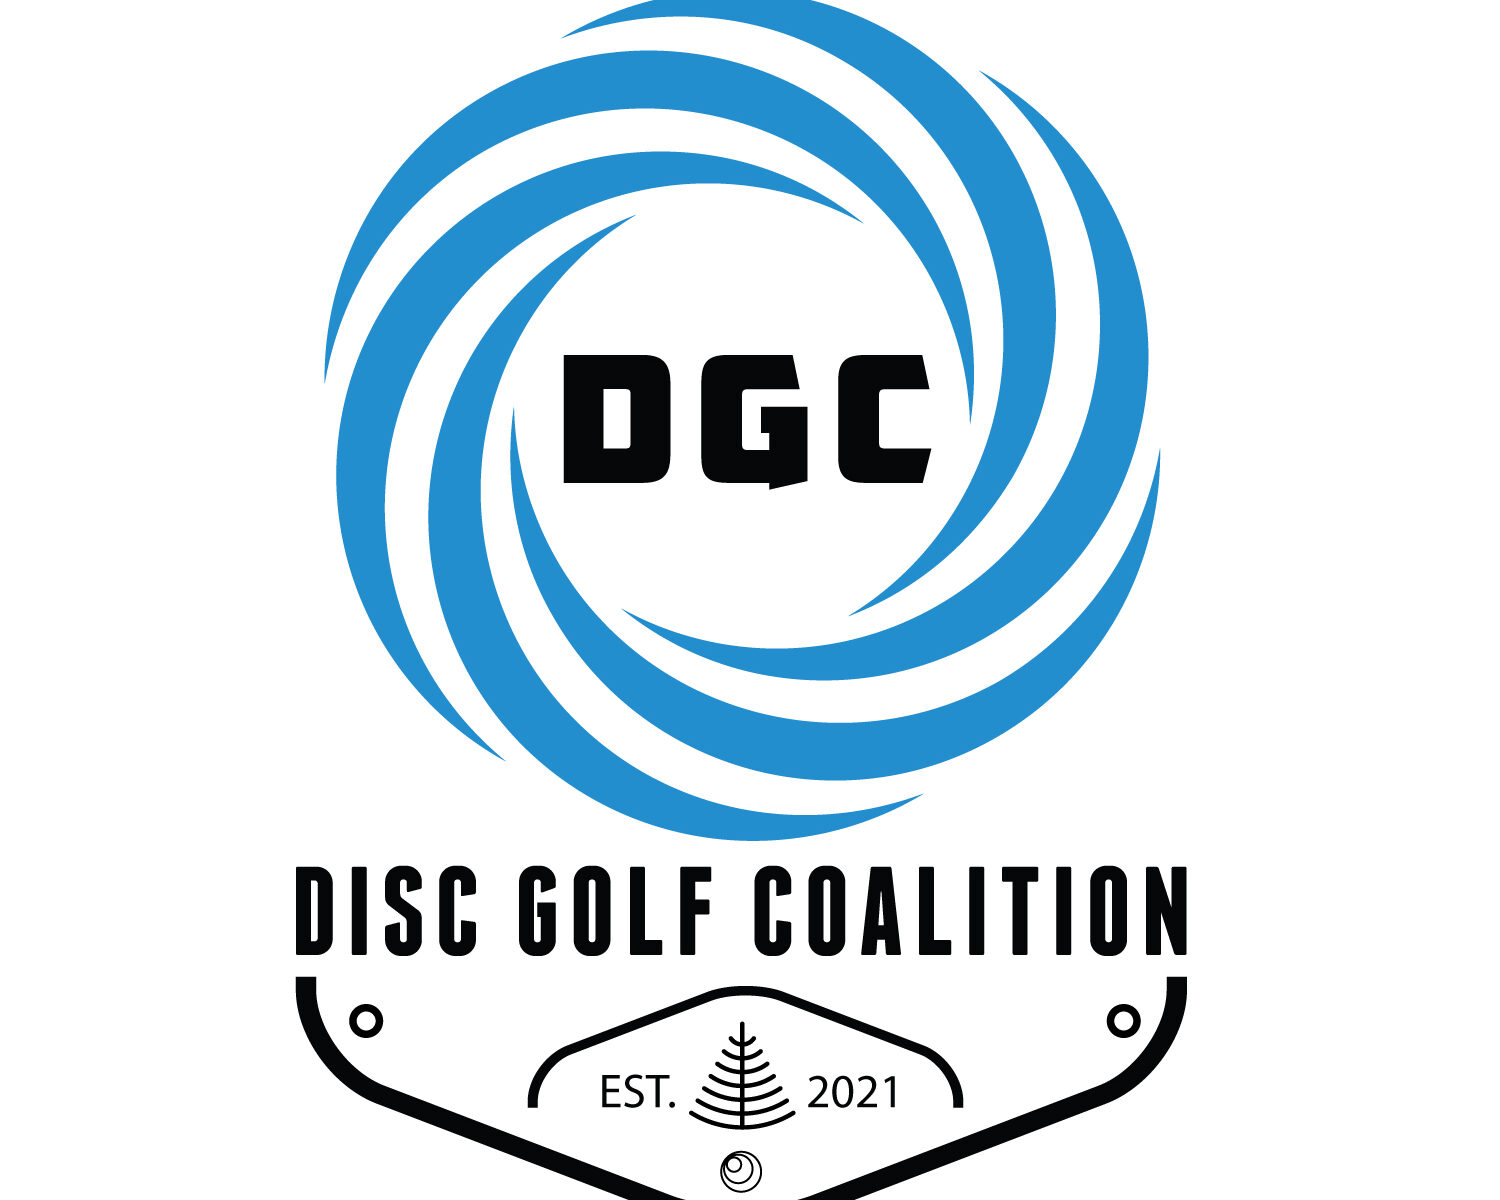 Disc Golf Coalition logo - EST. 2021